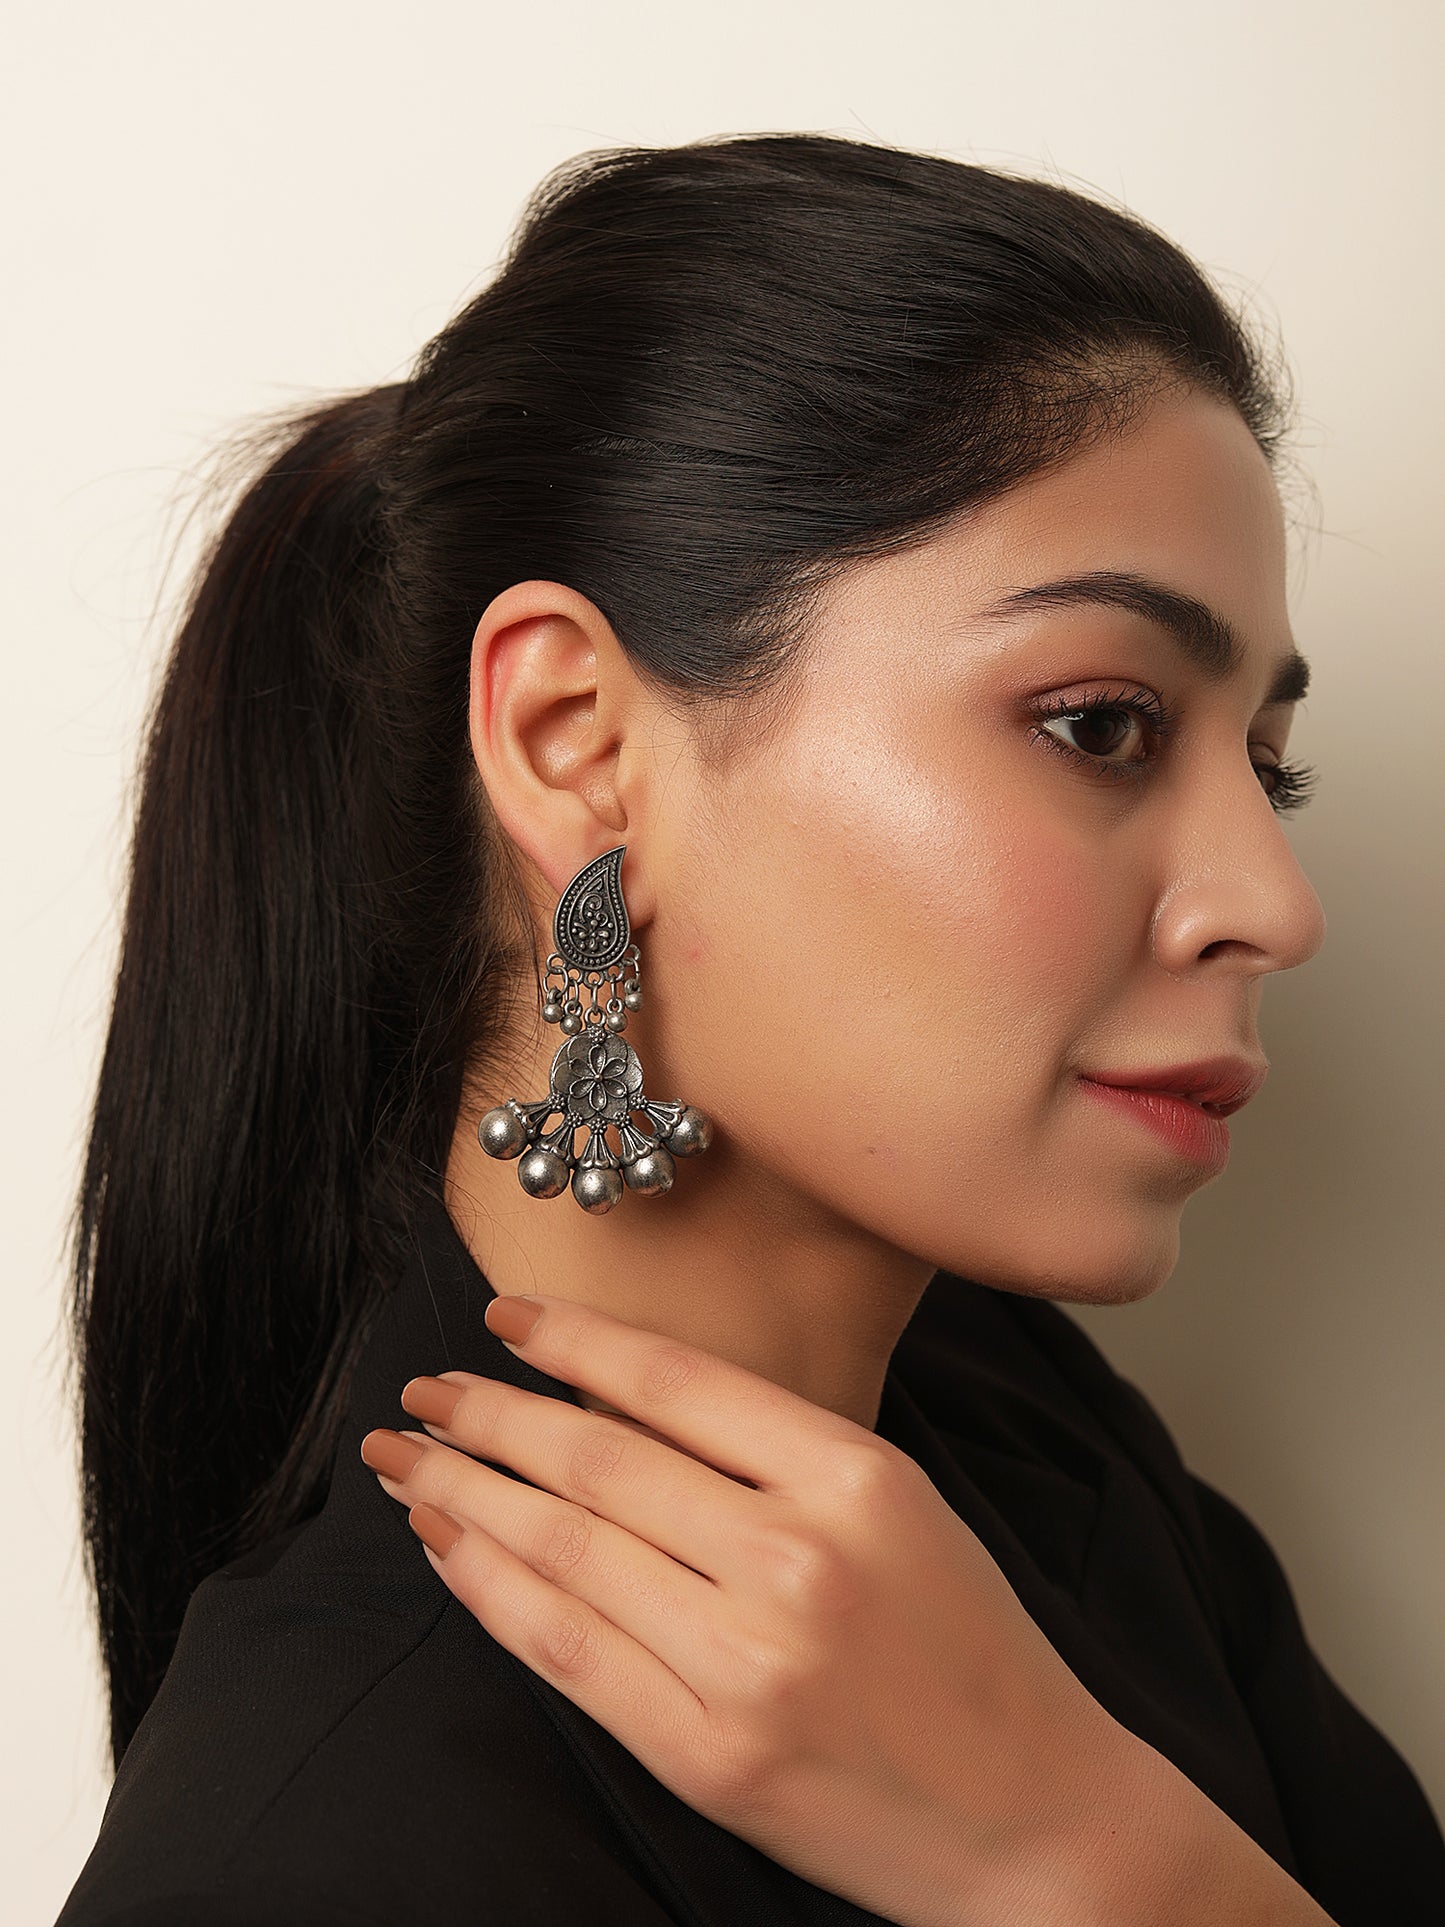 The Anokhi Adakari Earrings